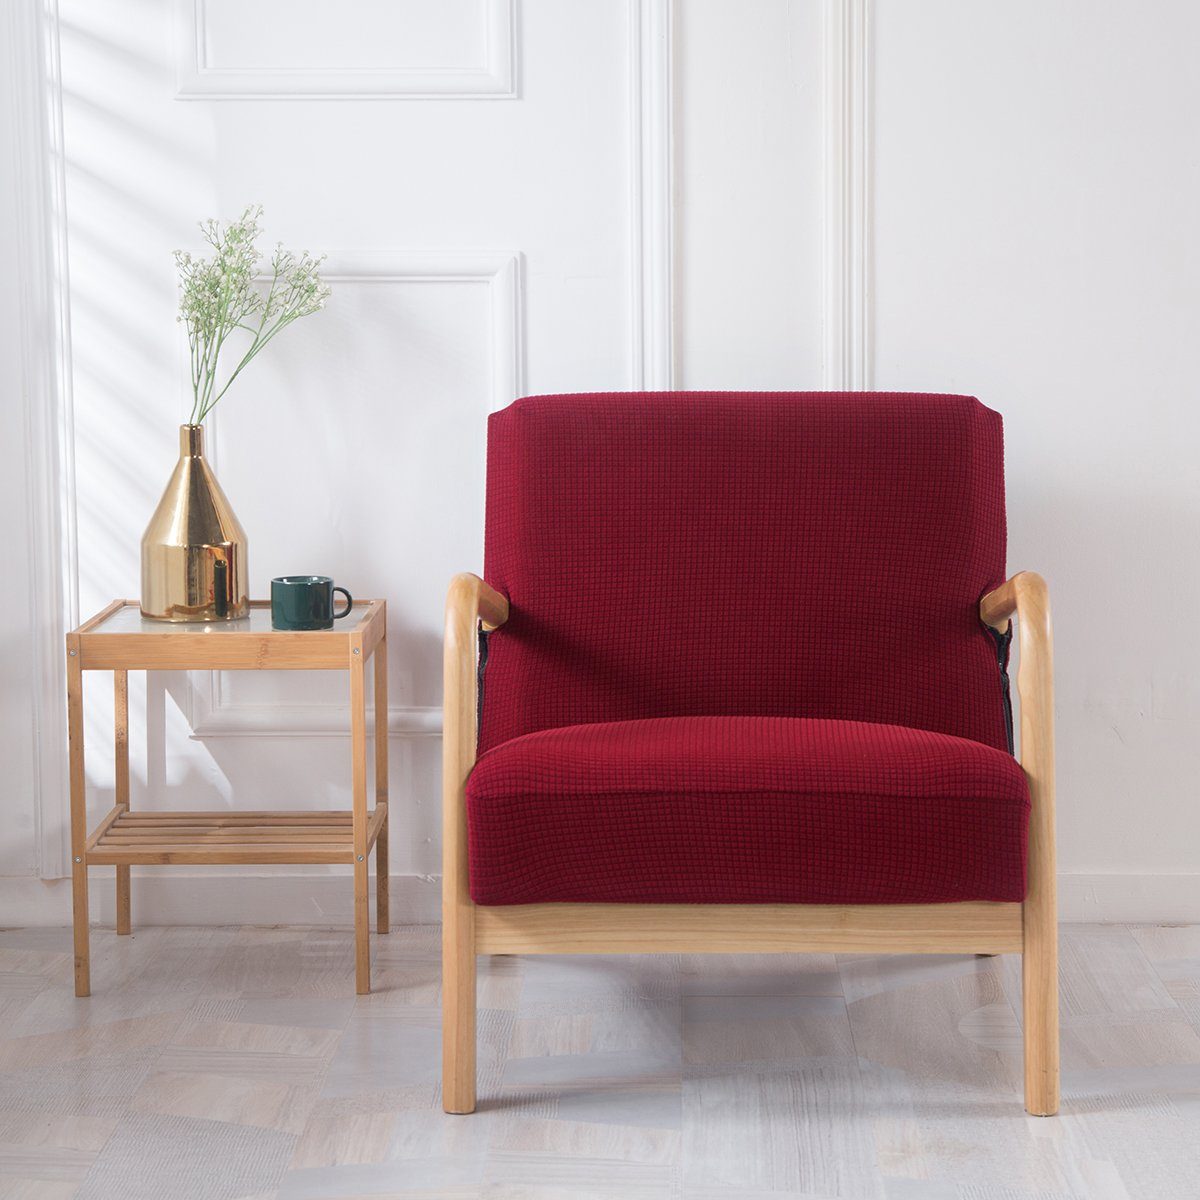 Stuhlbezug, Sesselbezug Stuhlhusse Weinrot Qelus, Stretch Reißverschluss Wohnkultur